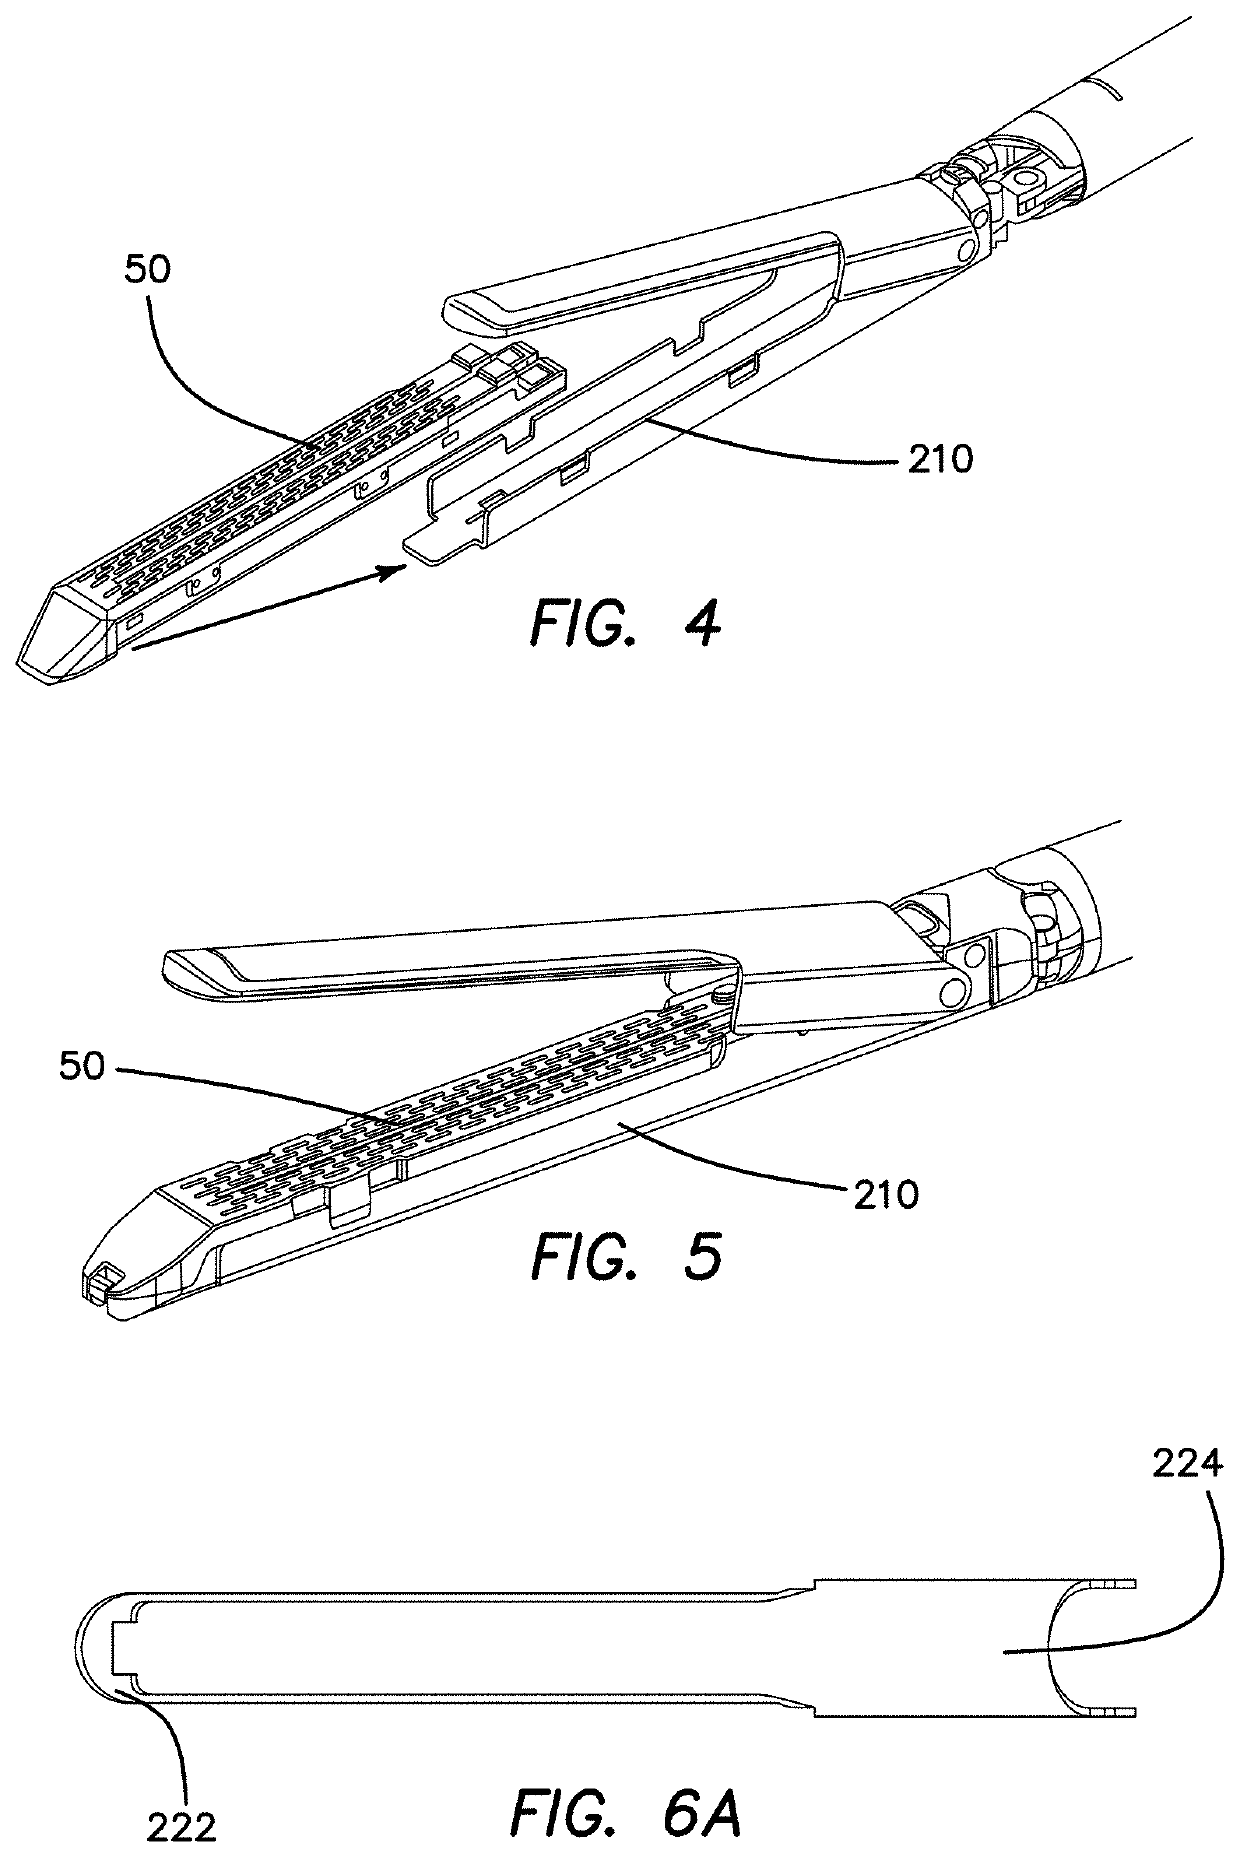 Reload shaft assembly for surgical stapler